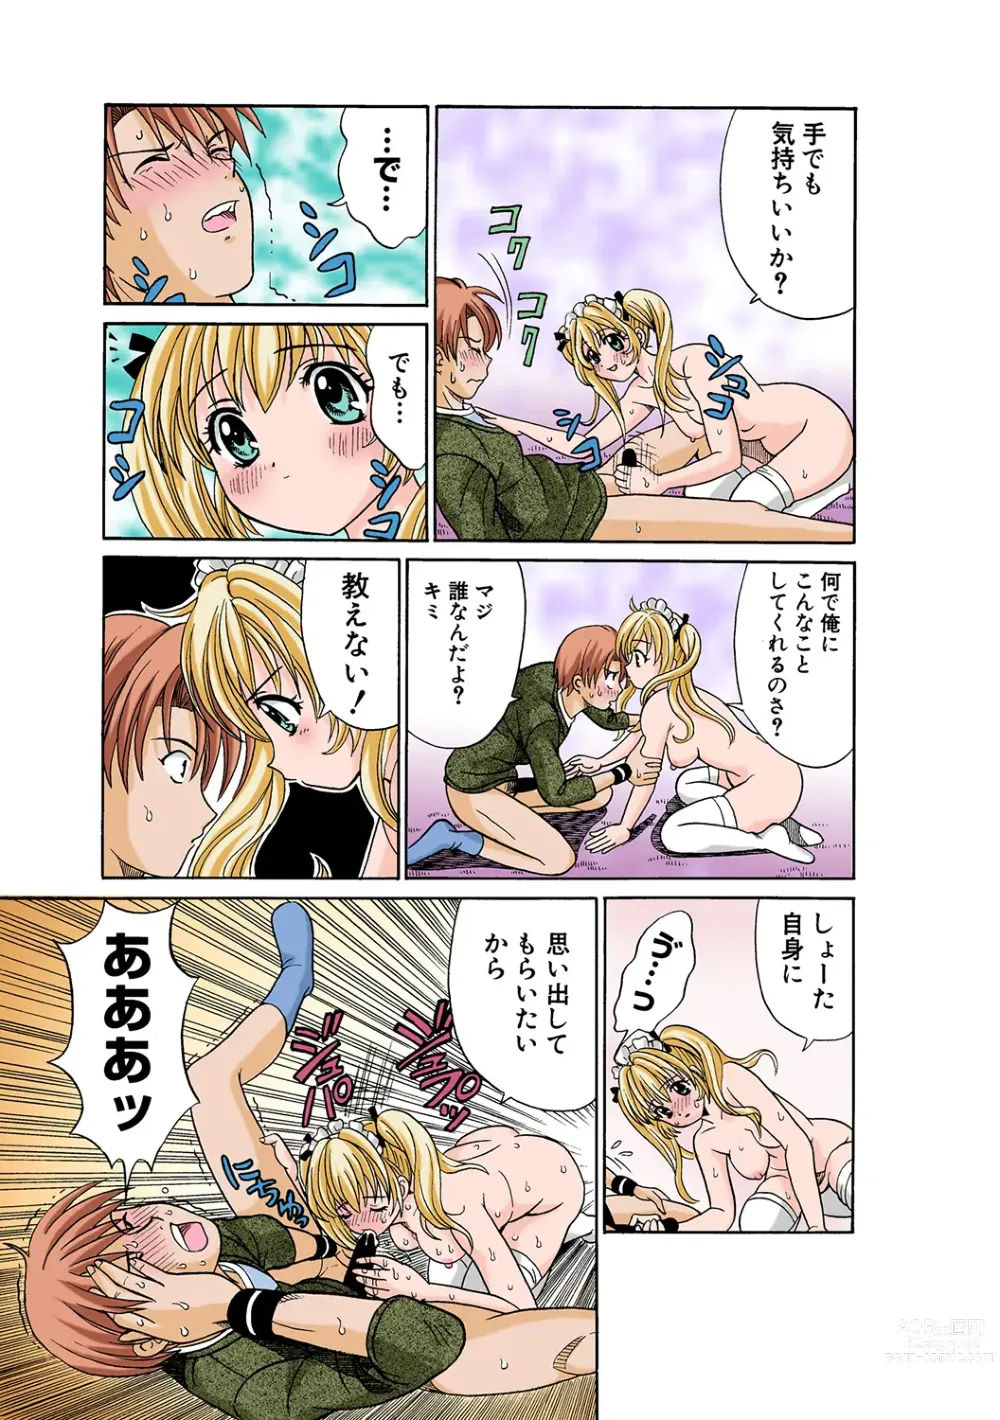 Page 109 of manga HiME-Mania Vol. 44